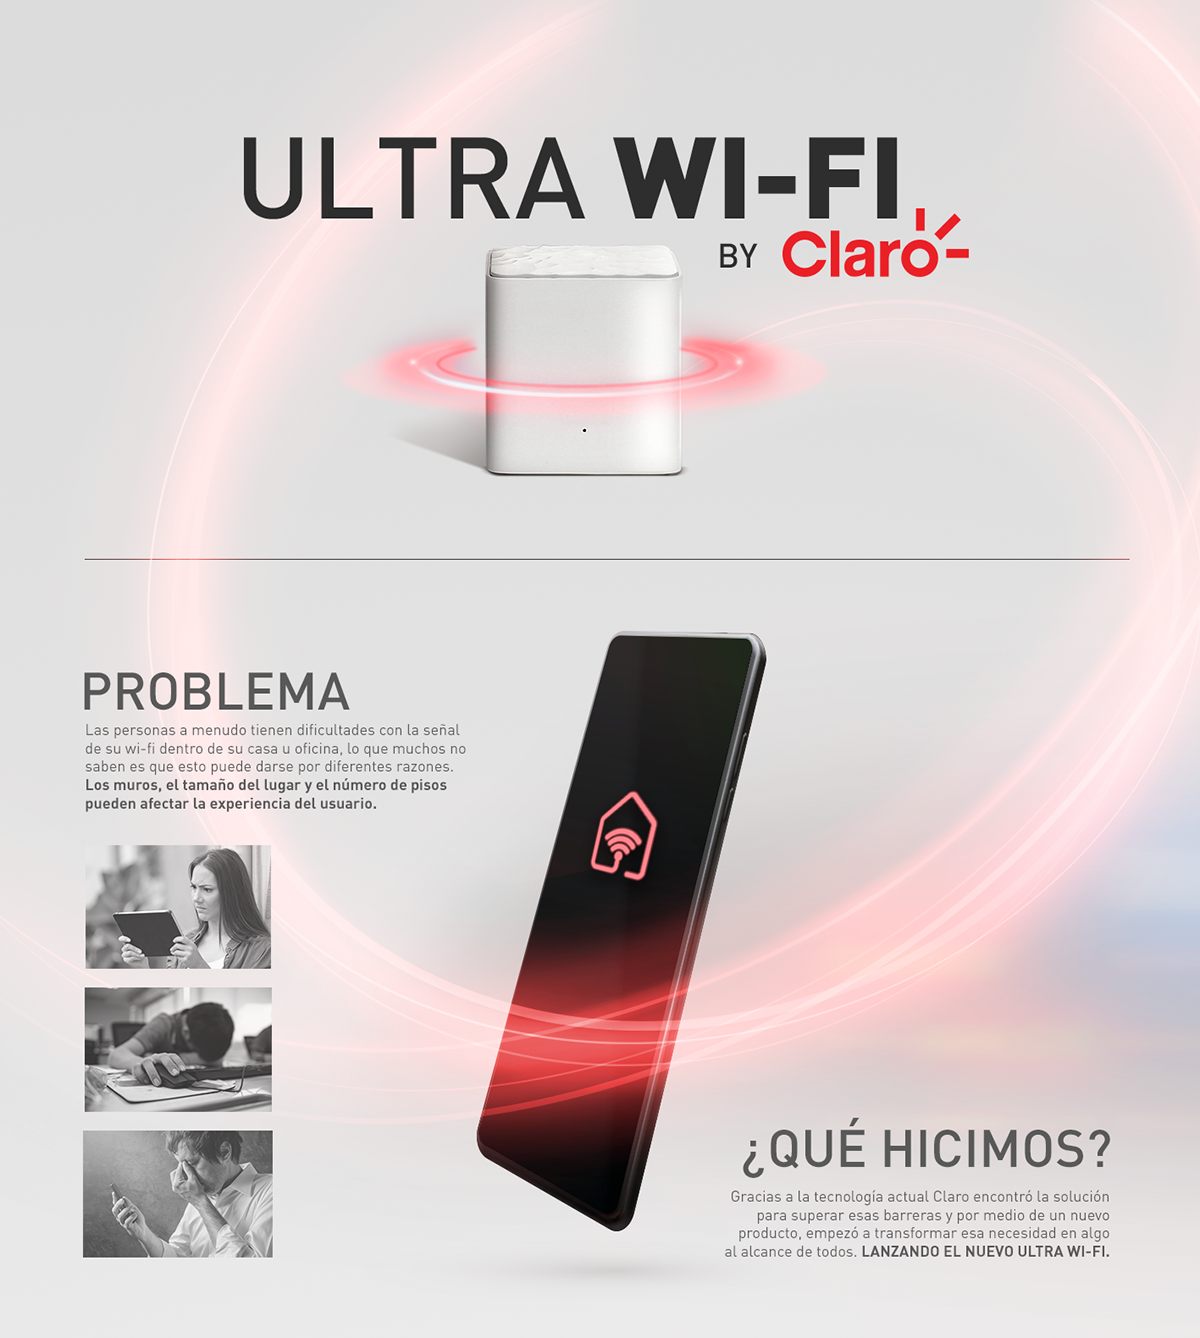 claro james rodriguez cellphone comunications telecomunications ads Wi-Fi ULTRA WI-FI redes Internet